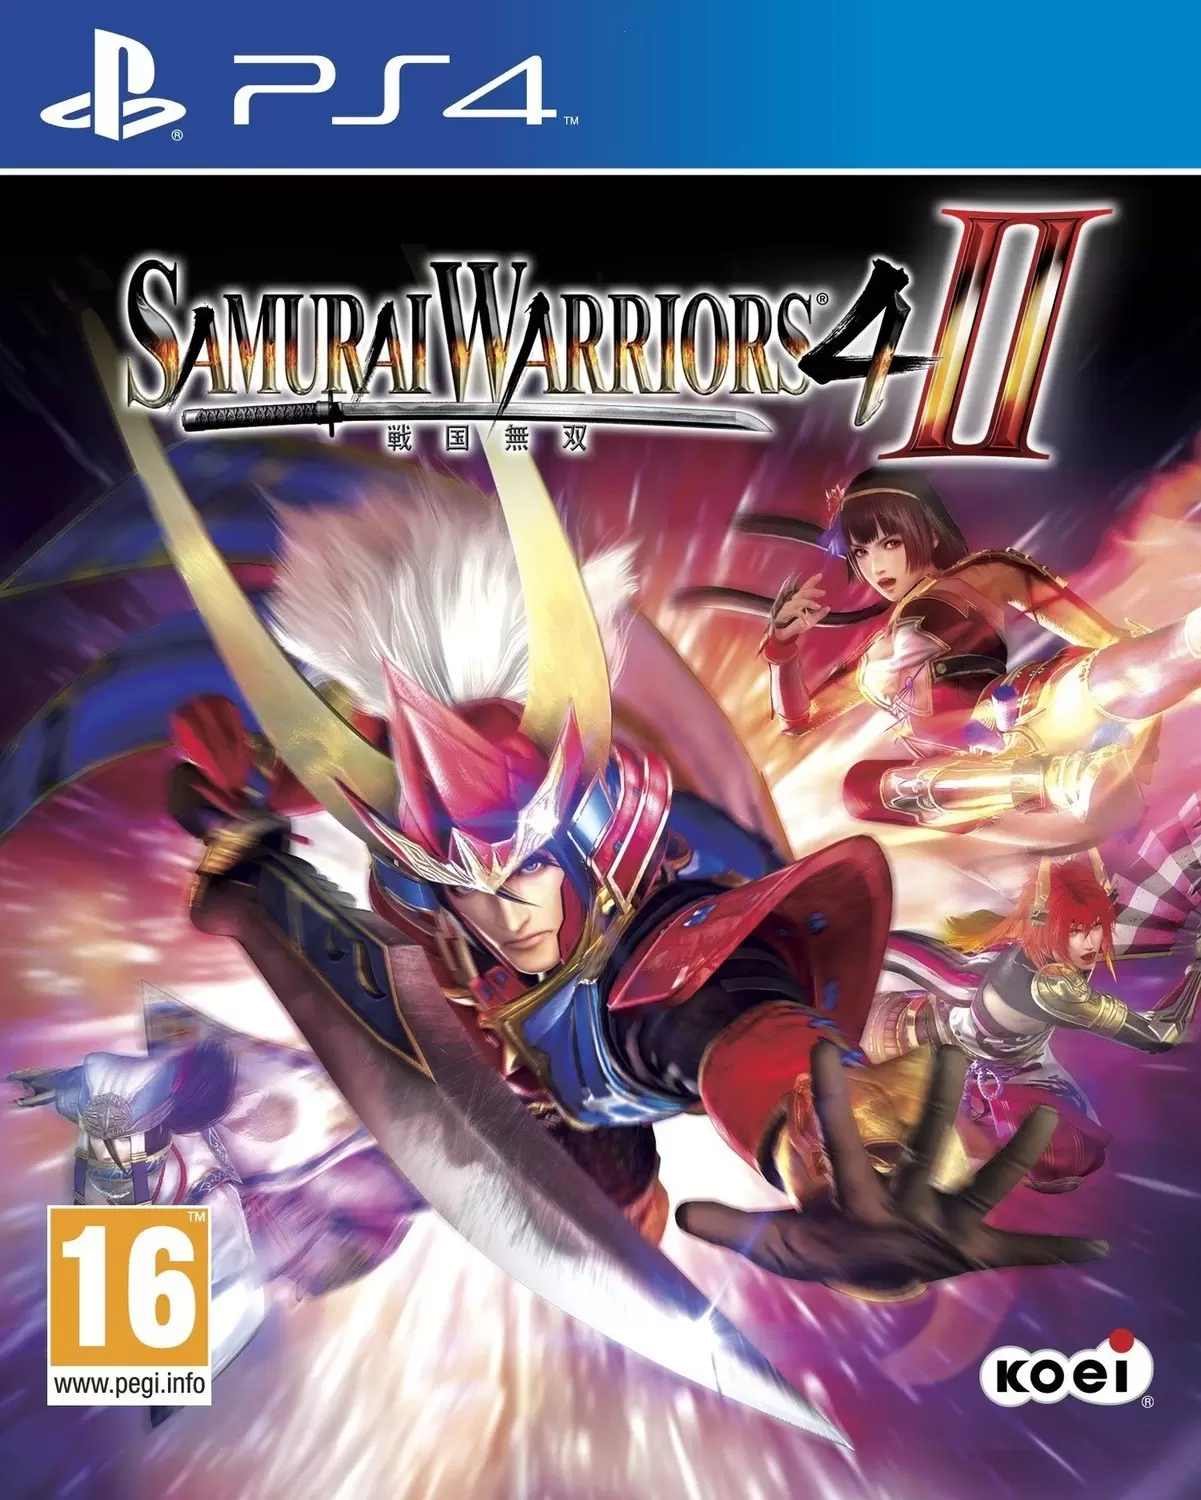 PS4 Games - Samurai Warriors 4-II